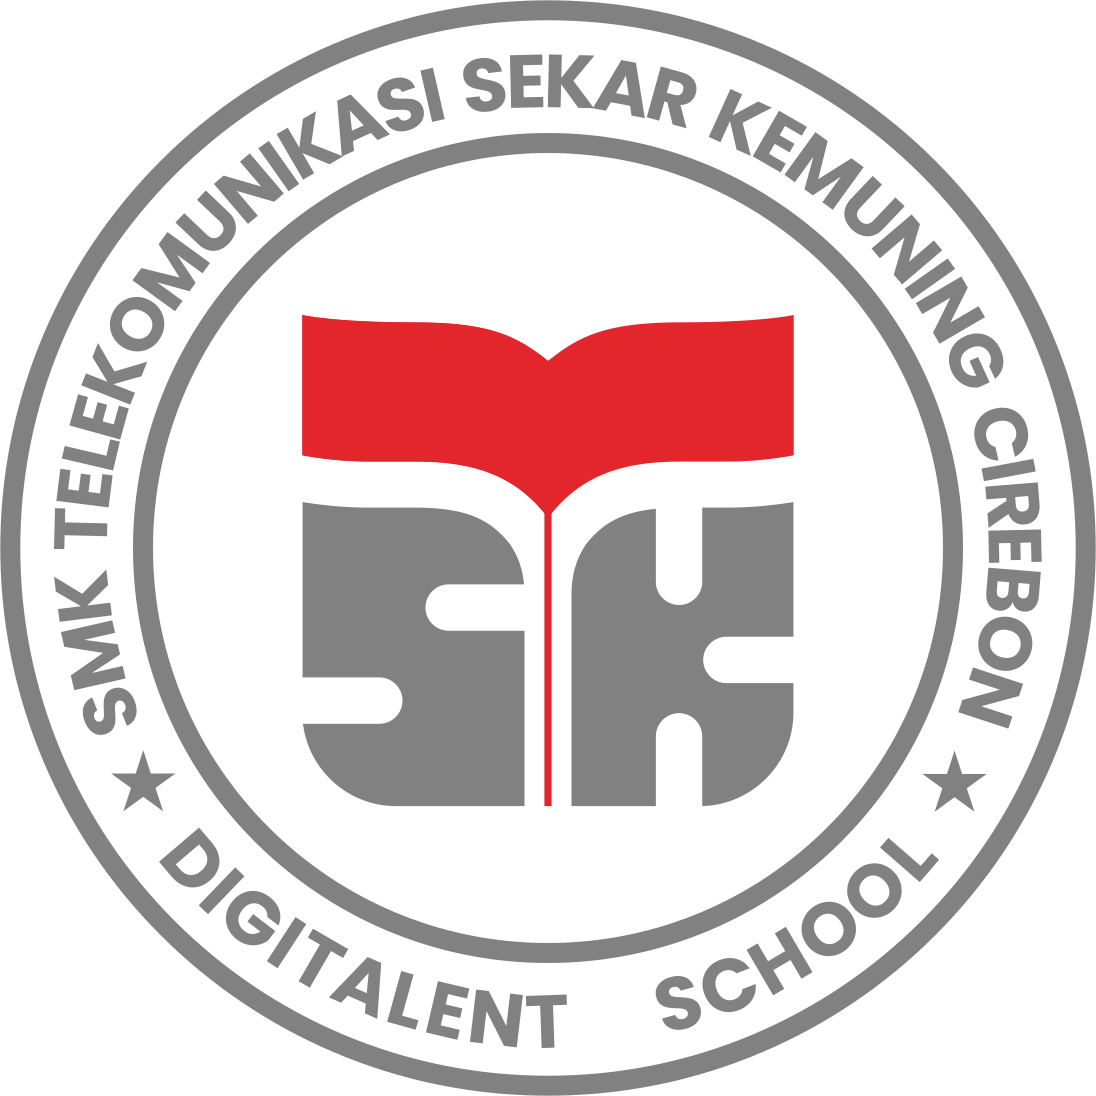 SMK Telekomunikasi Sekar Kemuning Cirebon